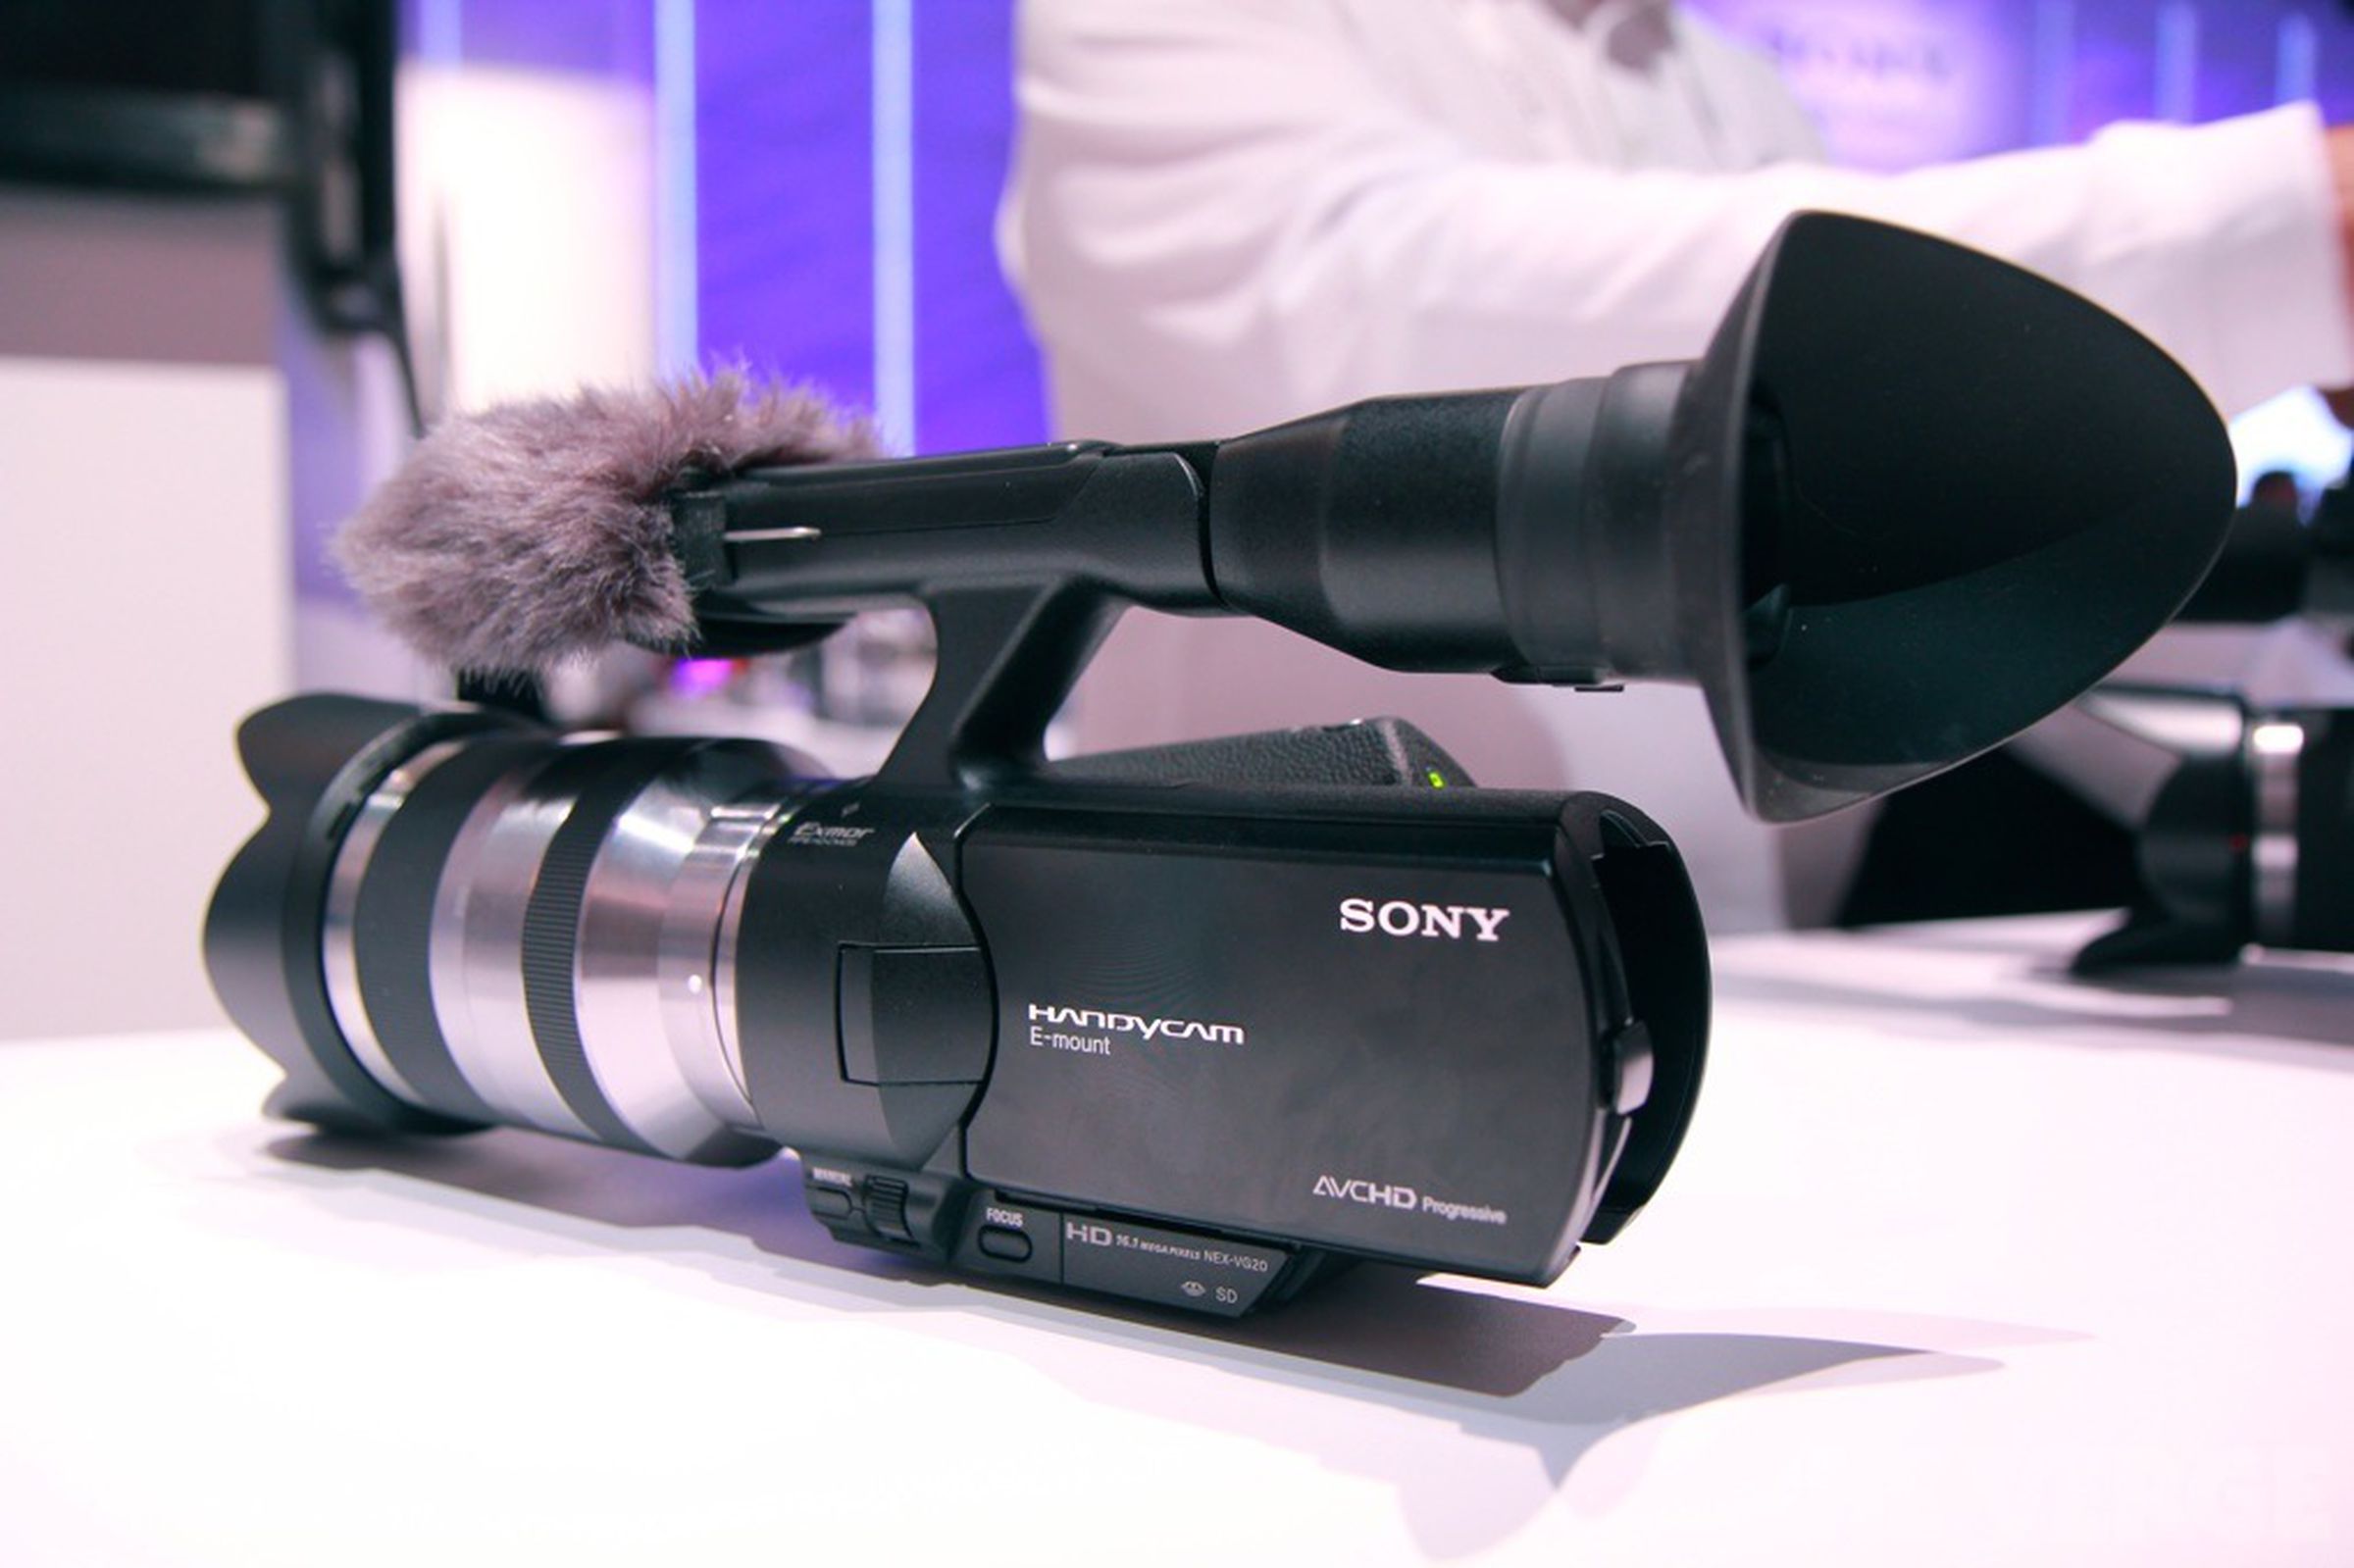 Sony NEX FS-100, VG-20 and lens lineup photos